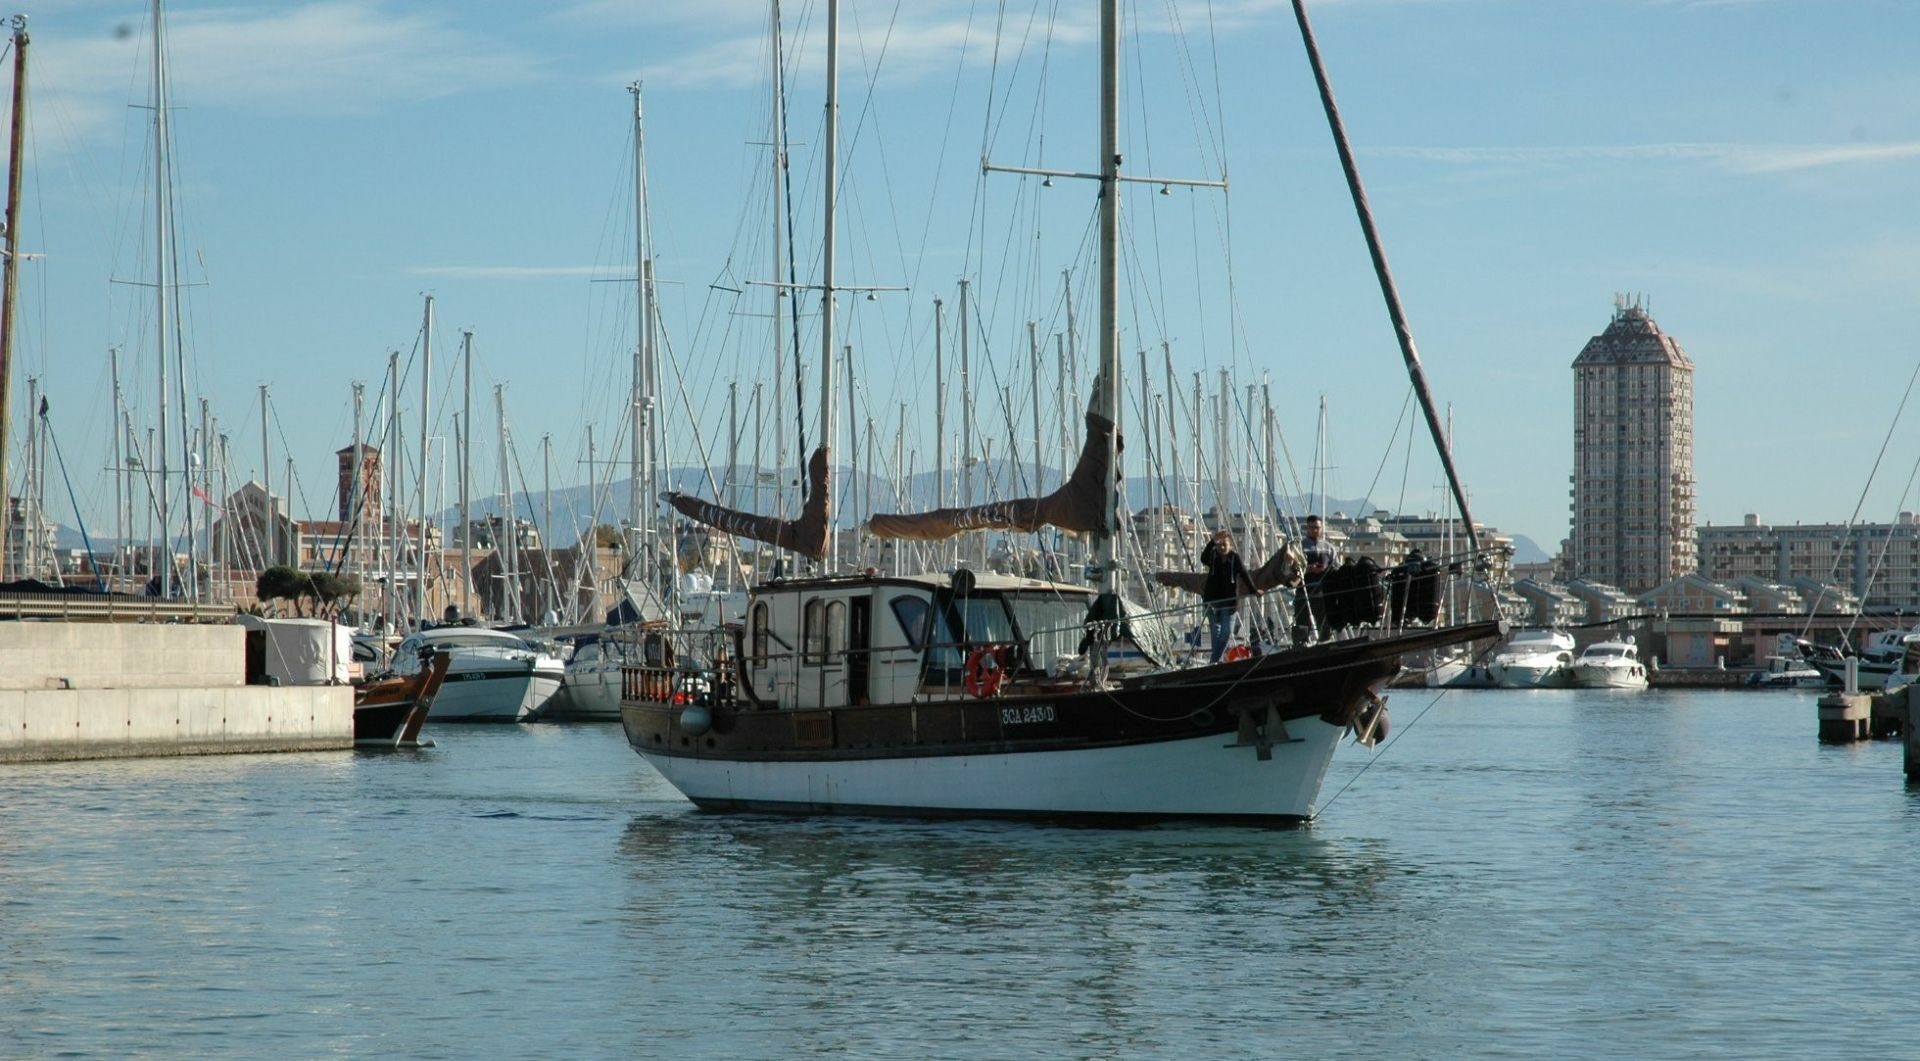 Escursioni in barca a vela San Felice Circeo